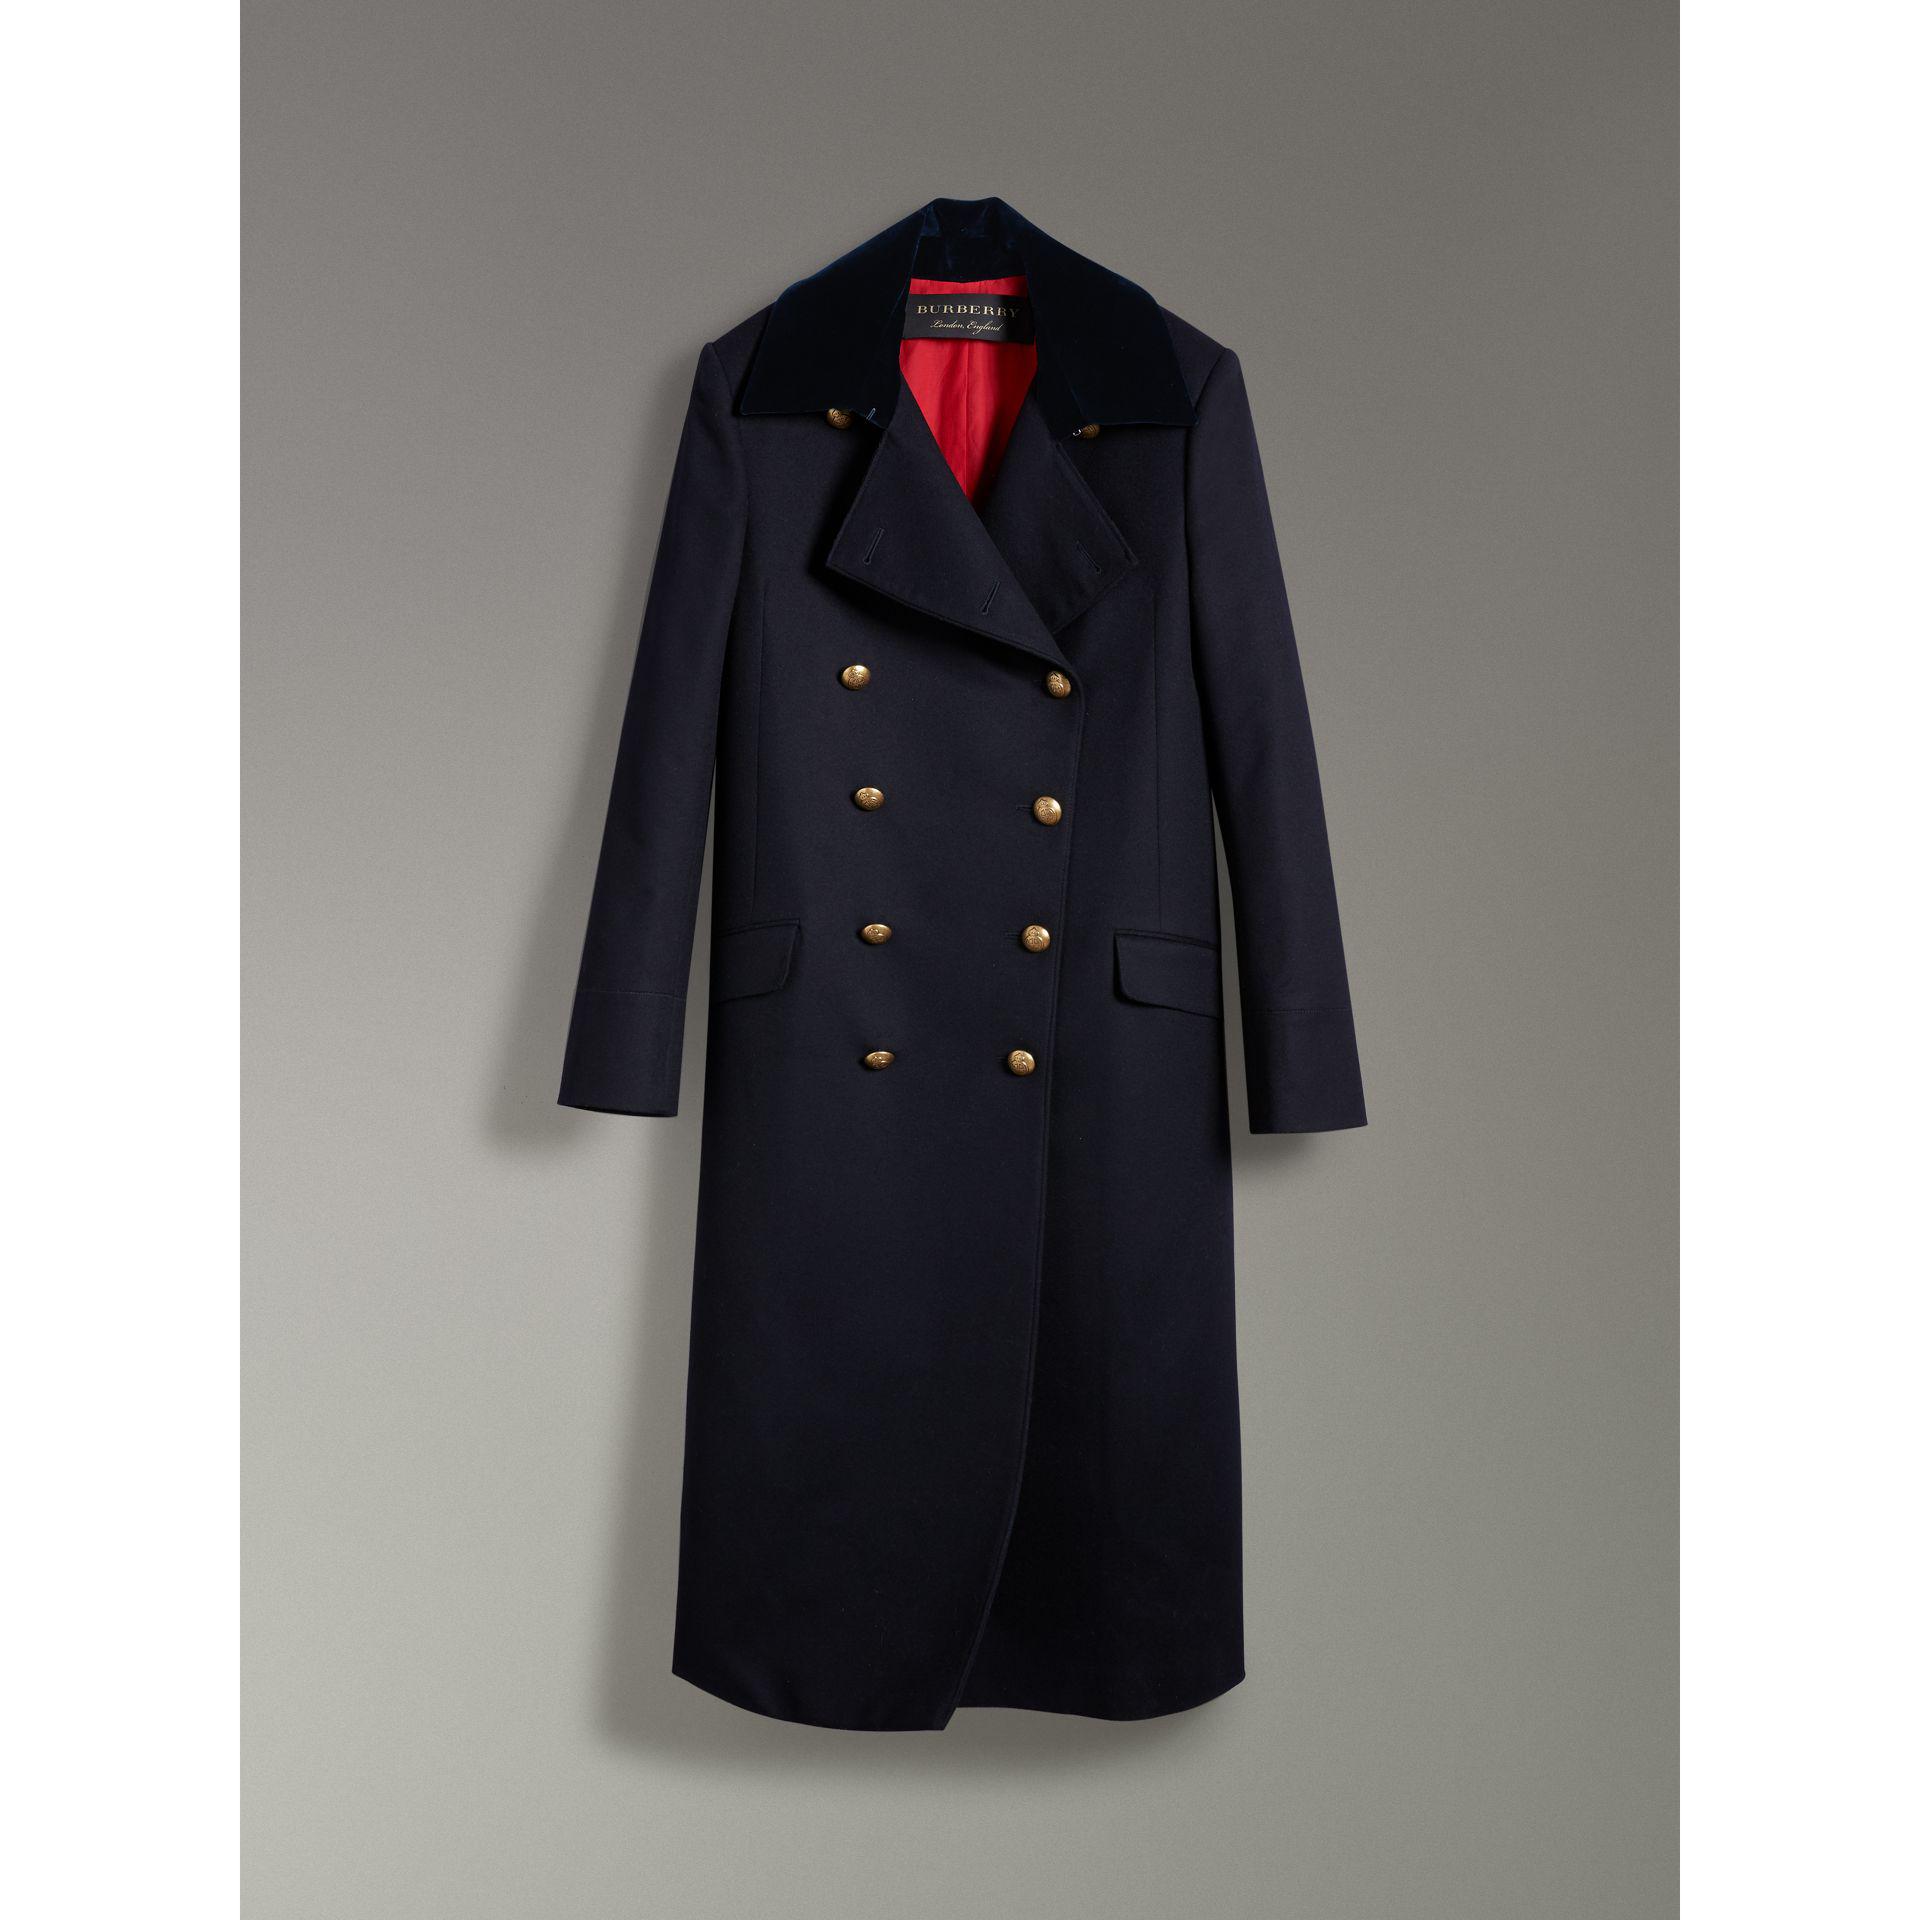 Burberry Doeskin Wool Military Coat in Dark Navy (Blue) - Lyst